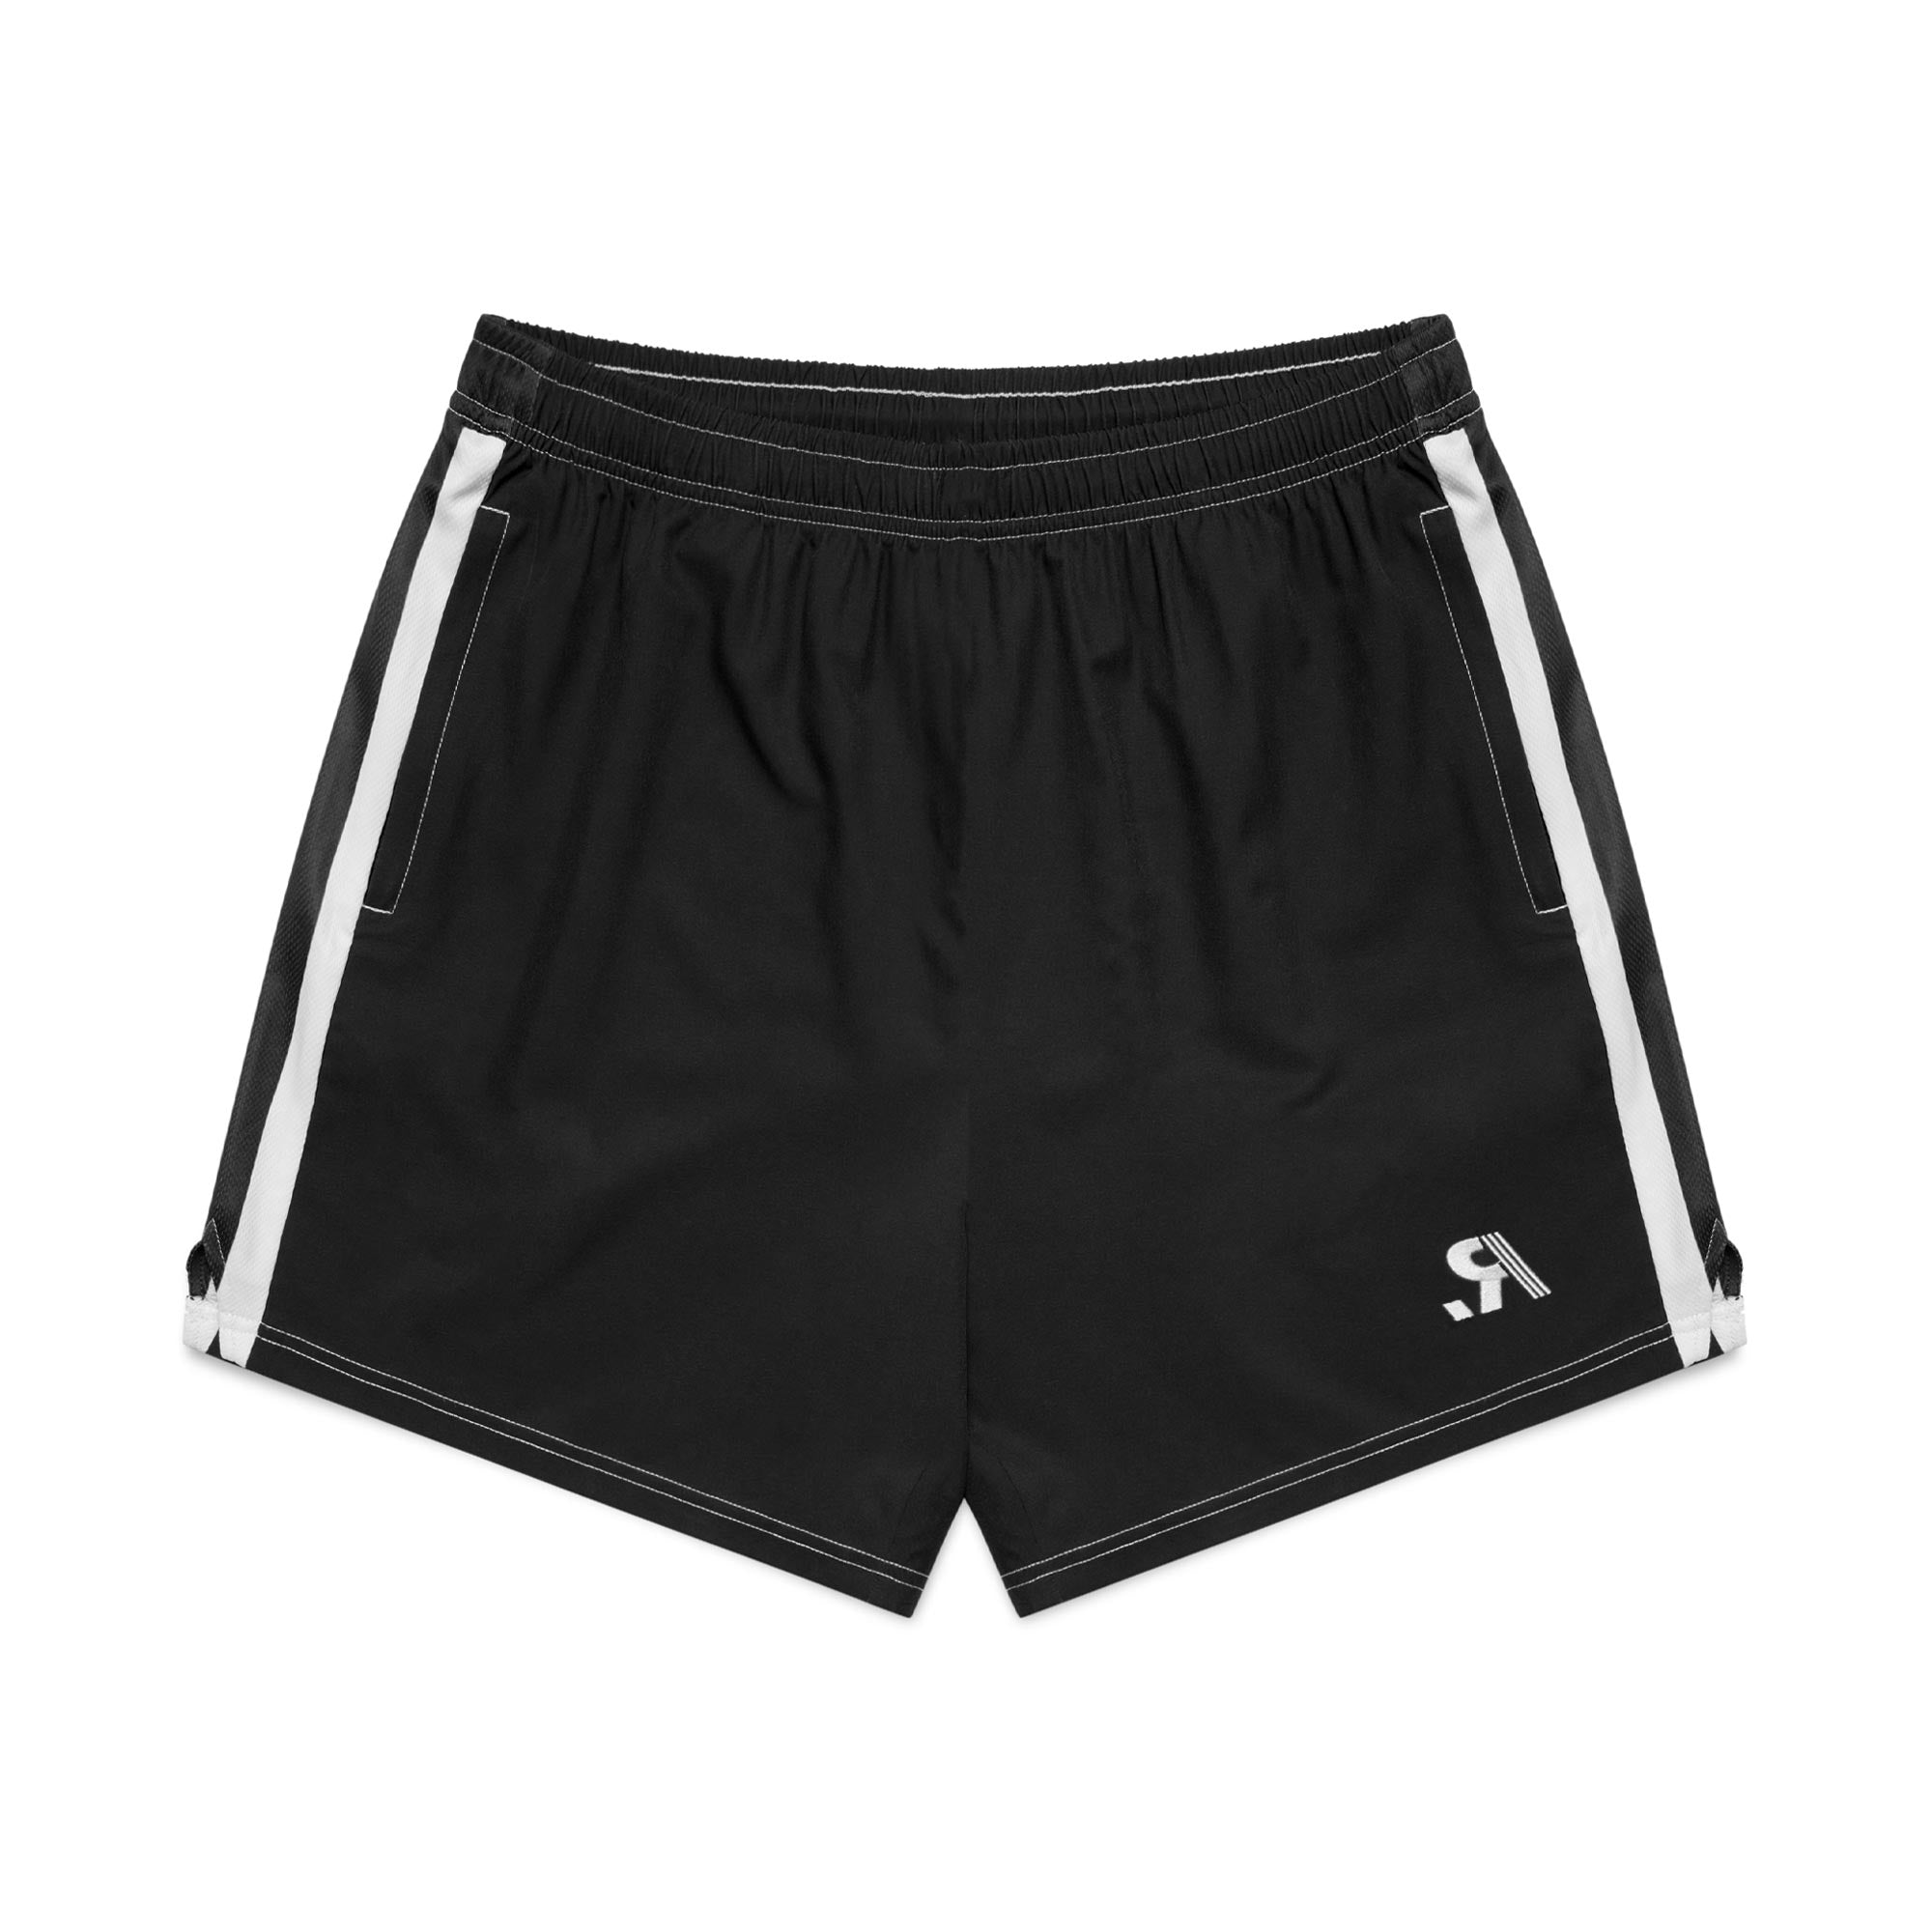 R.SPORT Tennis Shorts - Black/White